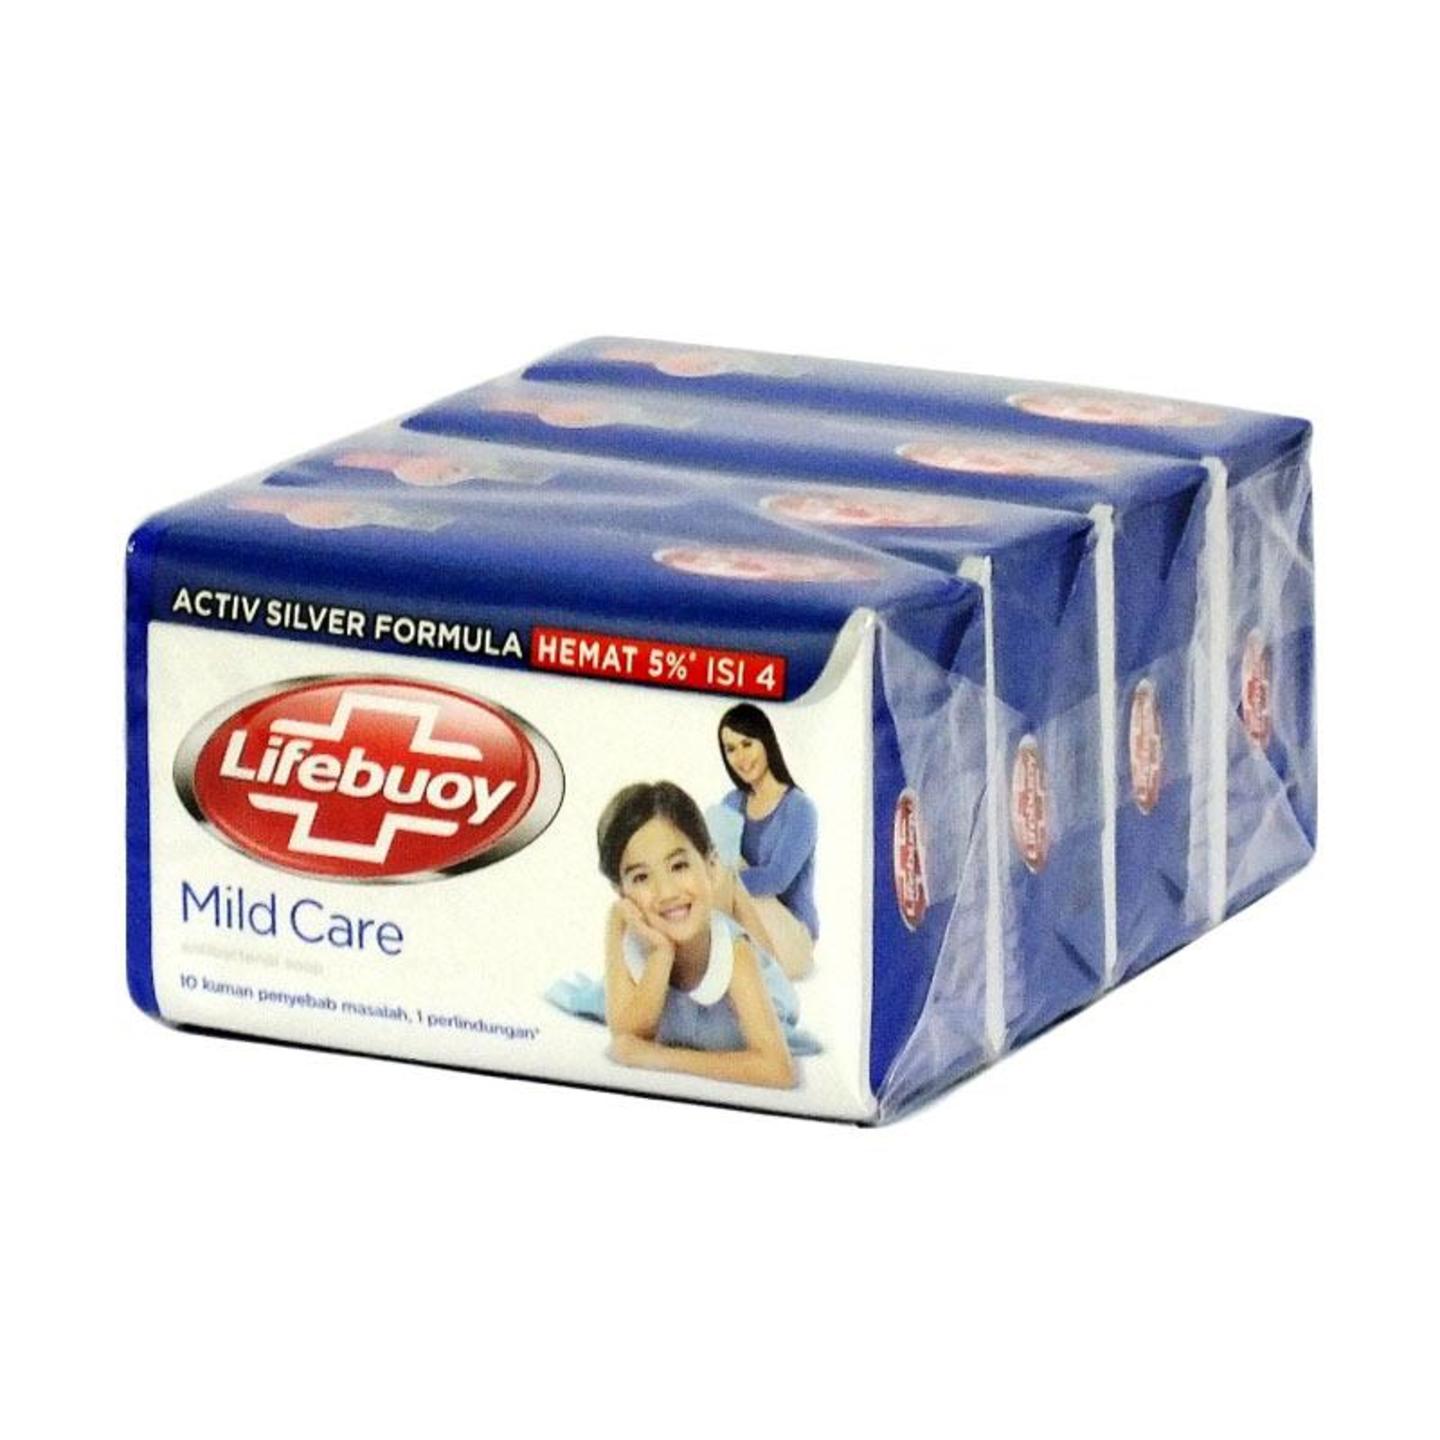 Lifebouy Soap Mild Care 4 Packs 60g